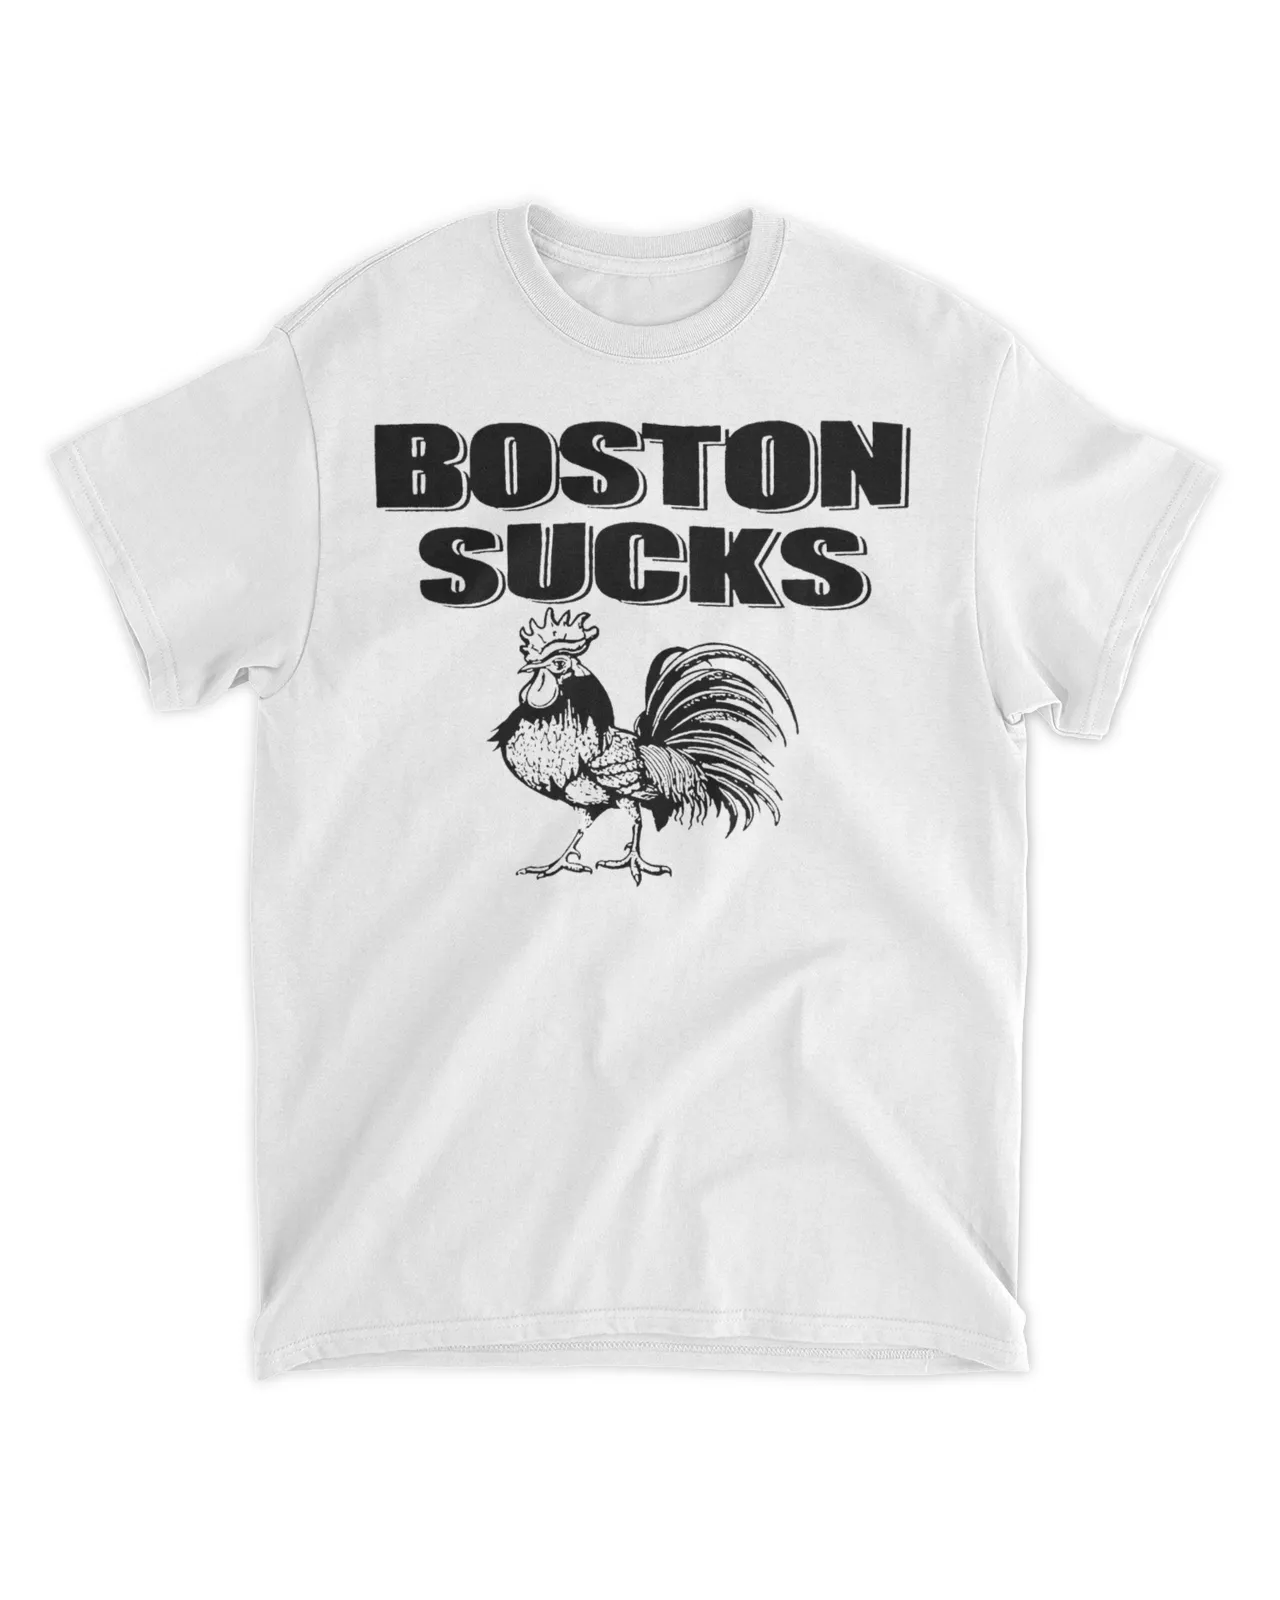  Boston sucks shirt